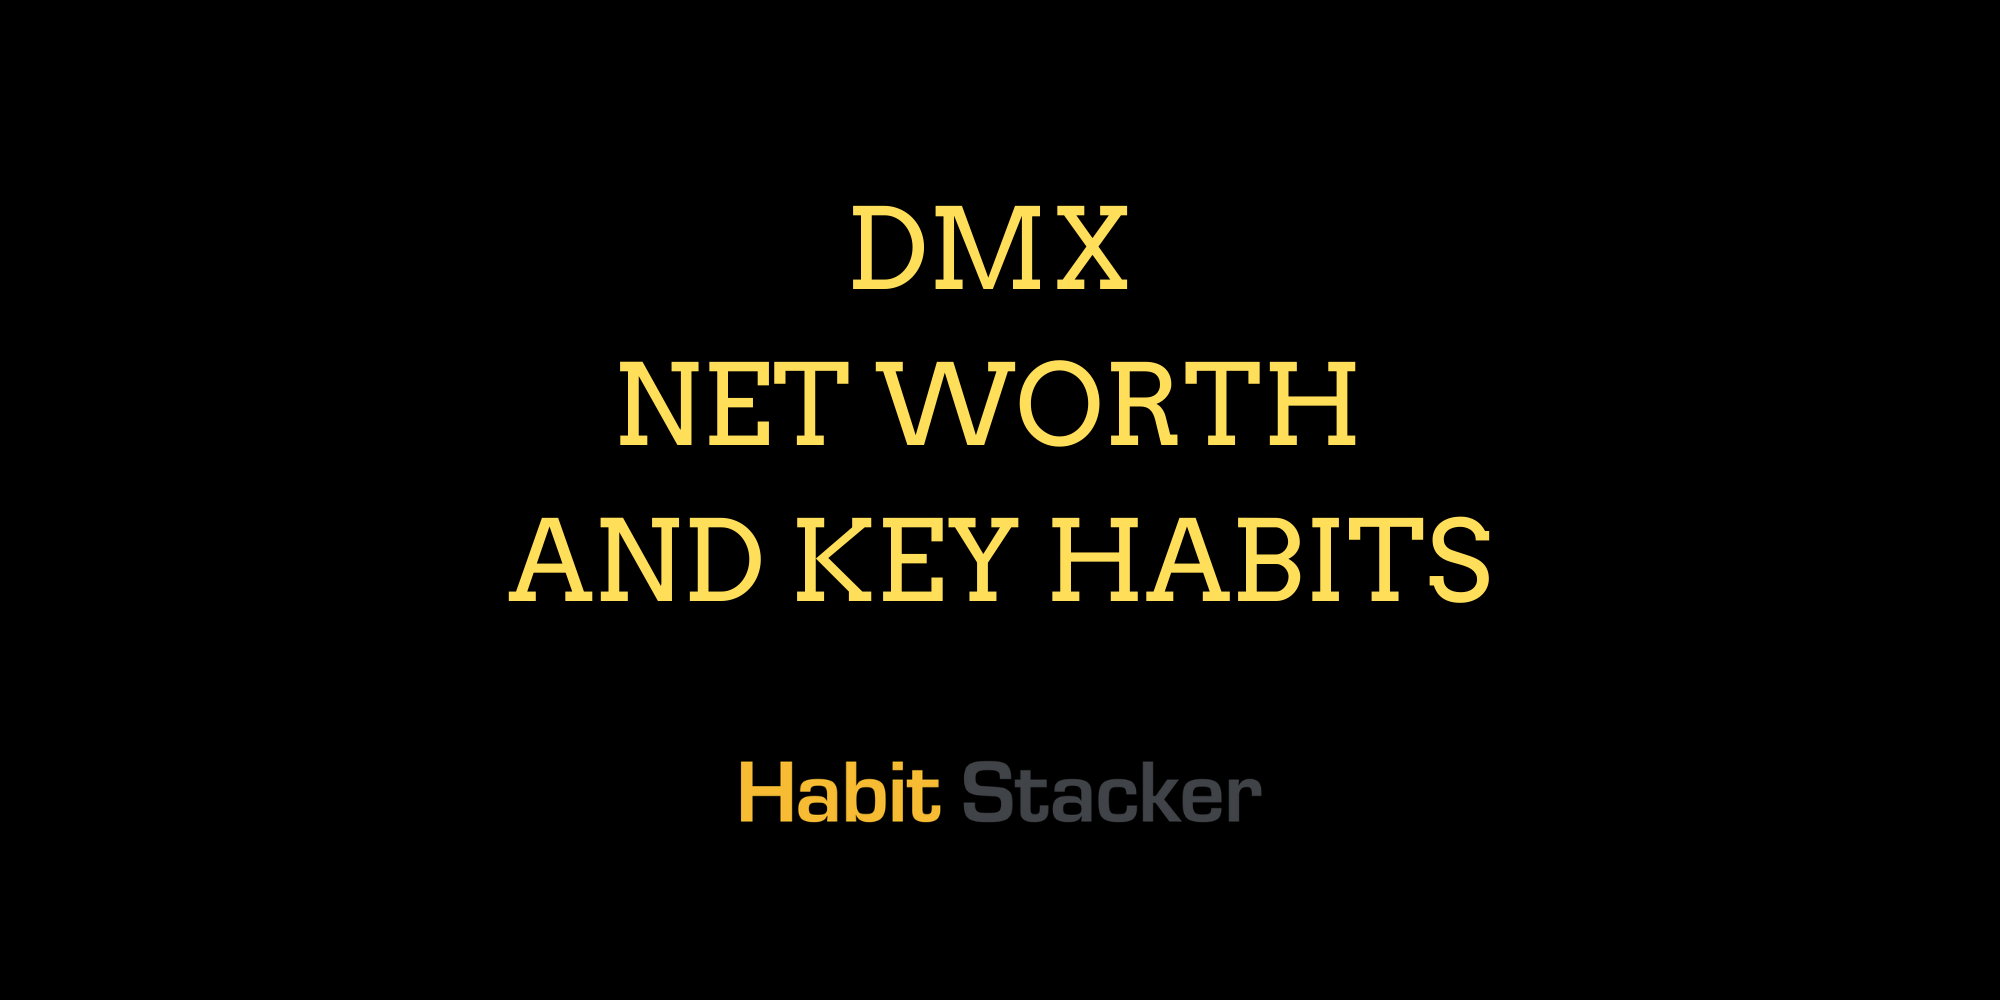 DMX Net Worth and Key Habits